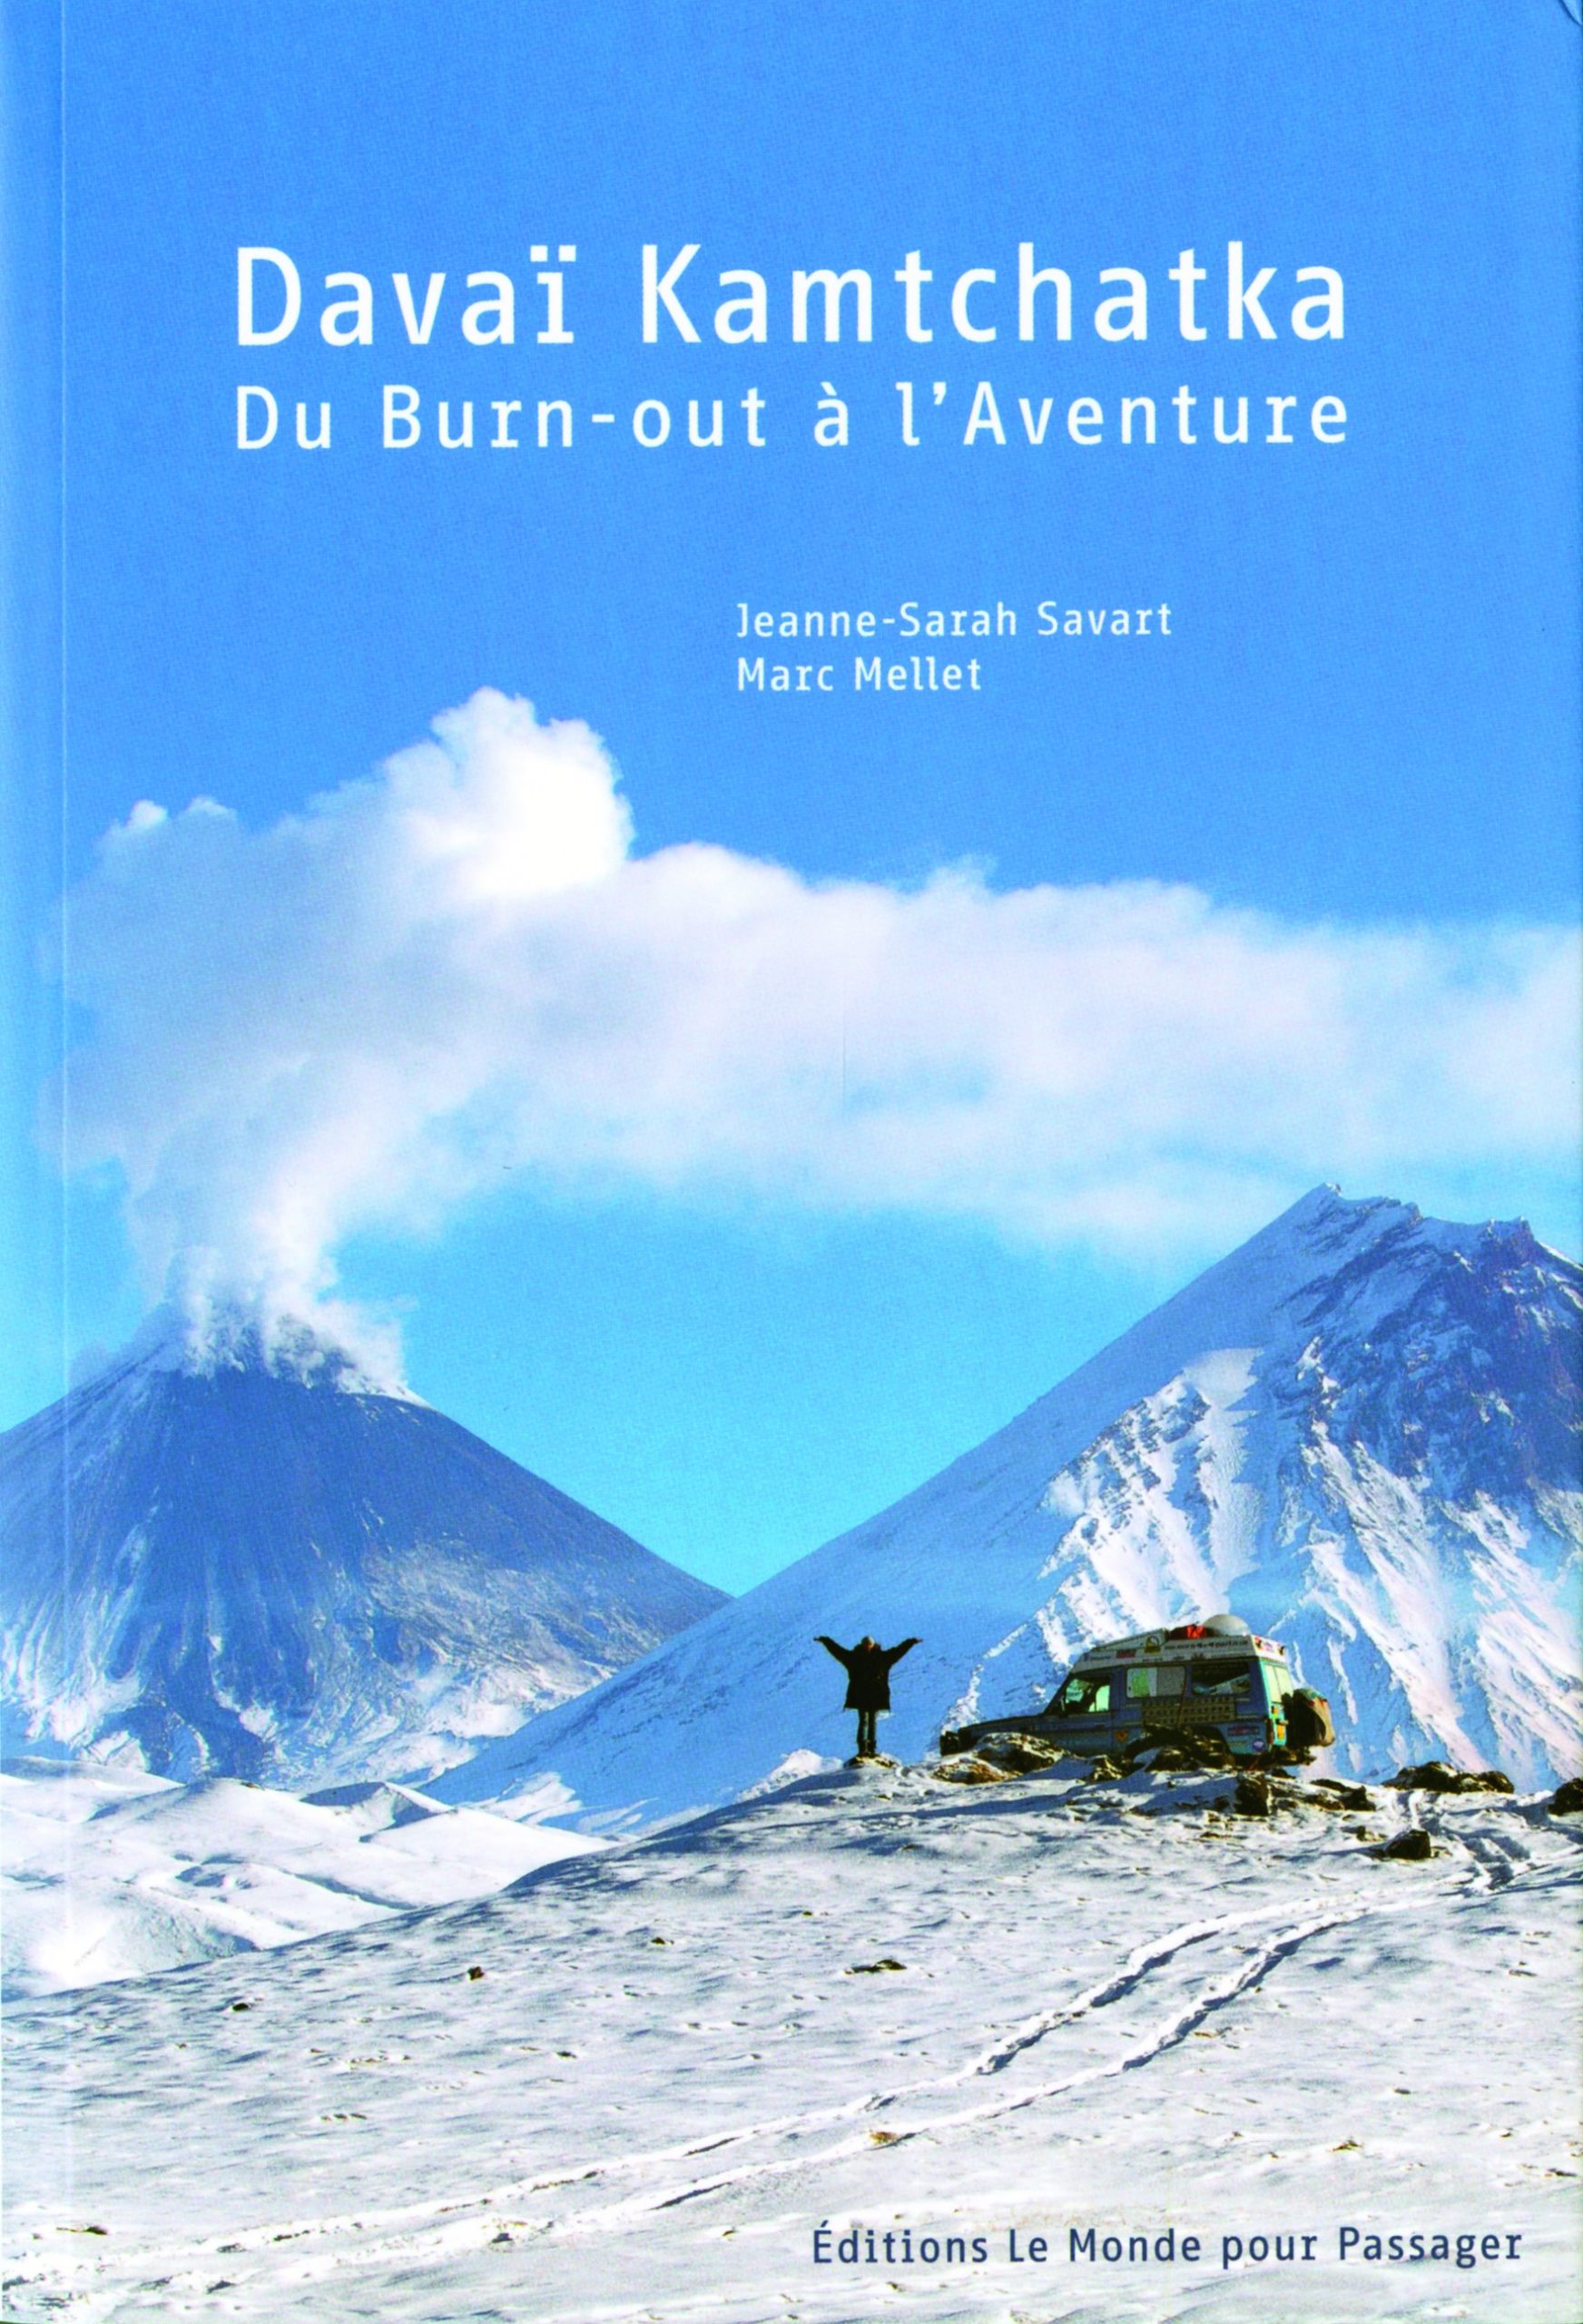 Davaï Kamtchatka - Du burn-out à l'aventure